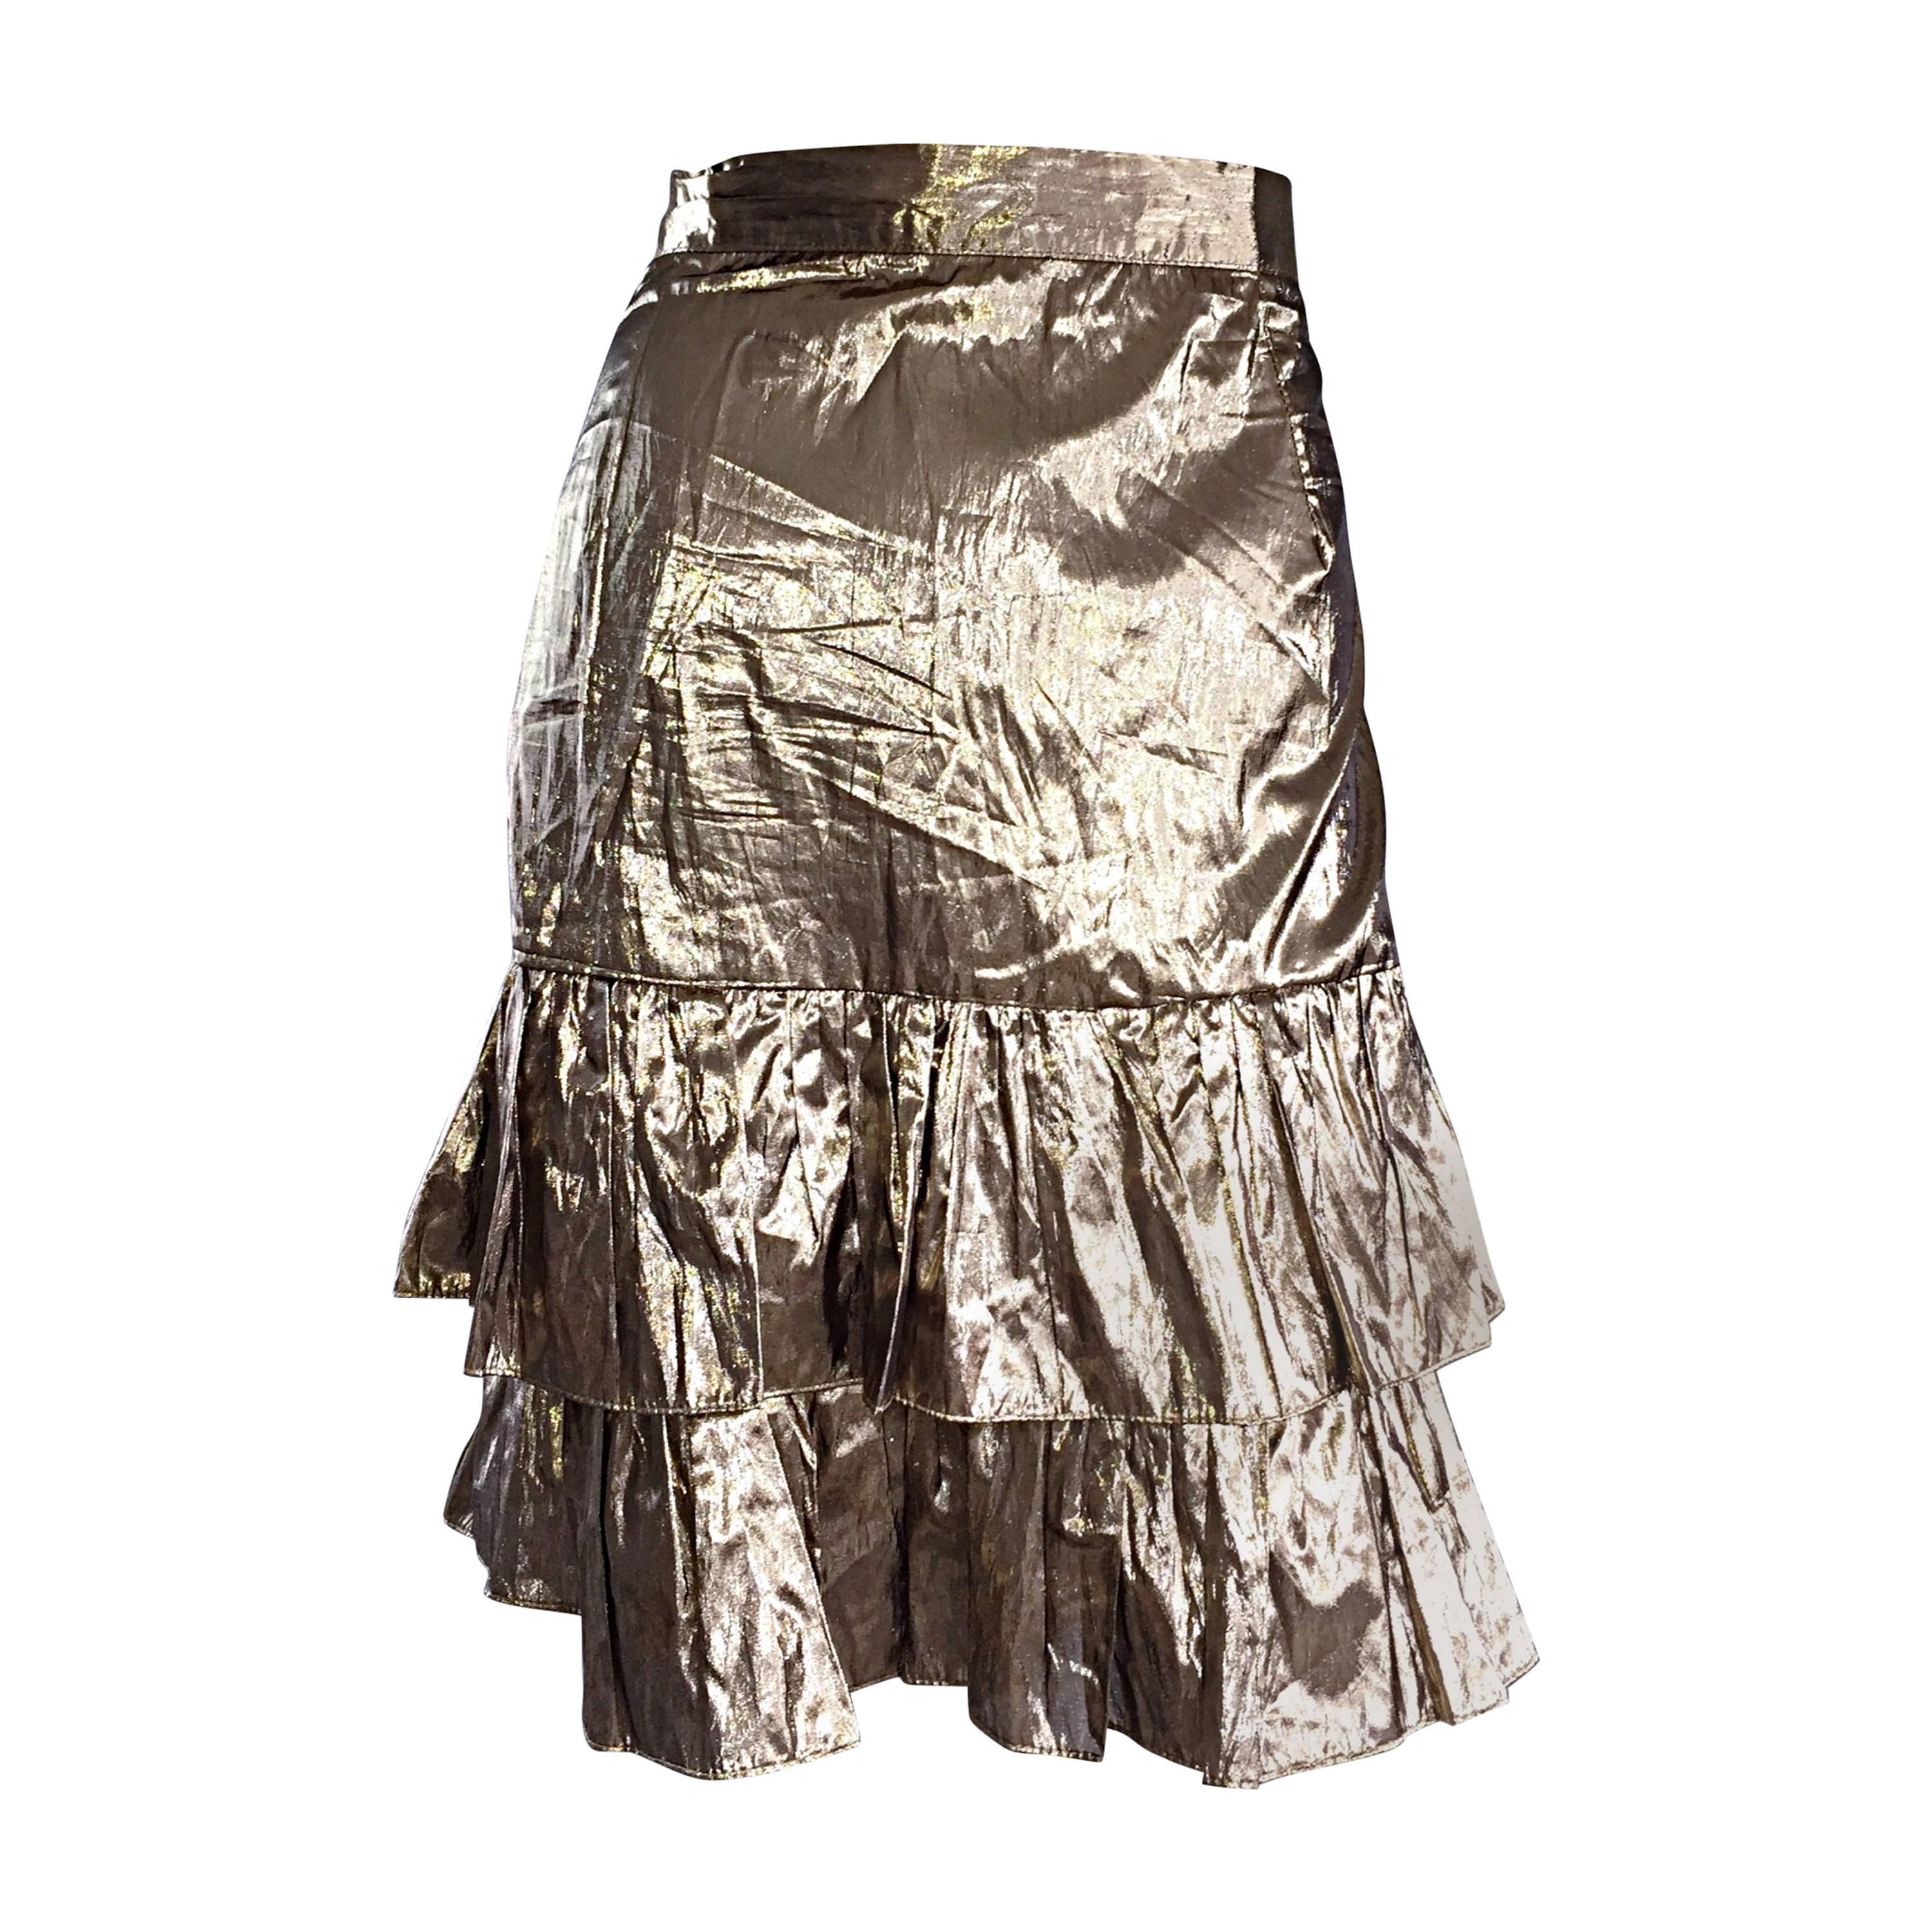 Amazing 1980s 80s Gold Metallic Vintage Tiered Pleated Ruffle Skirt